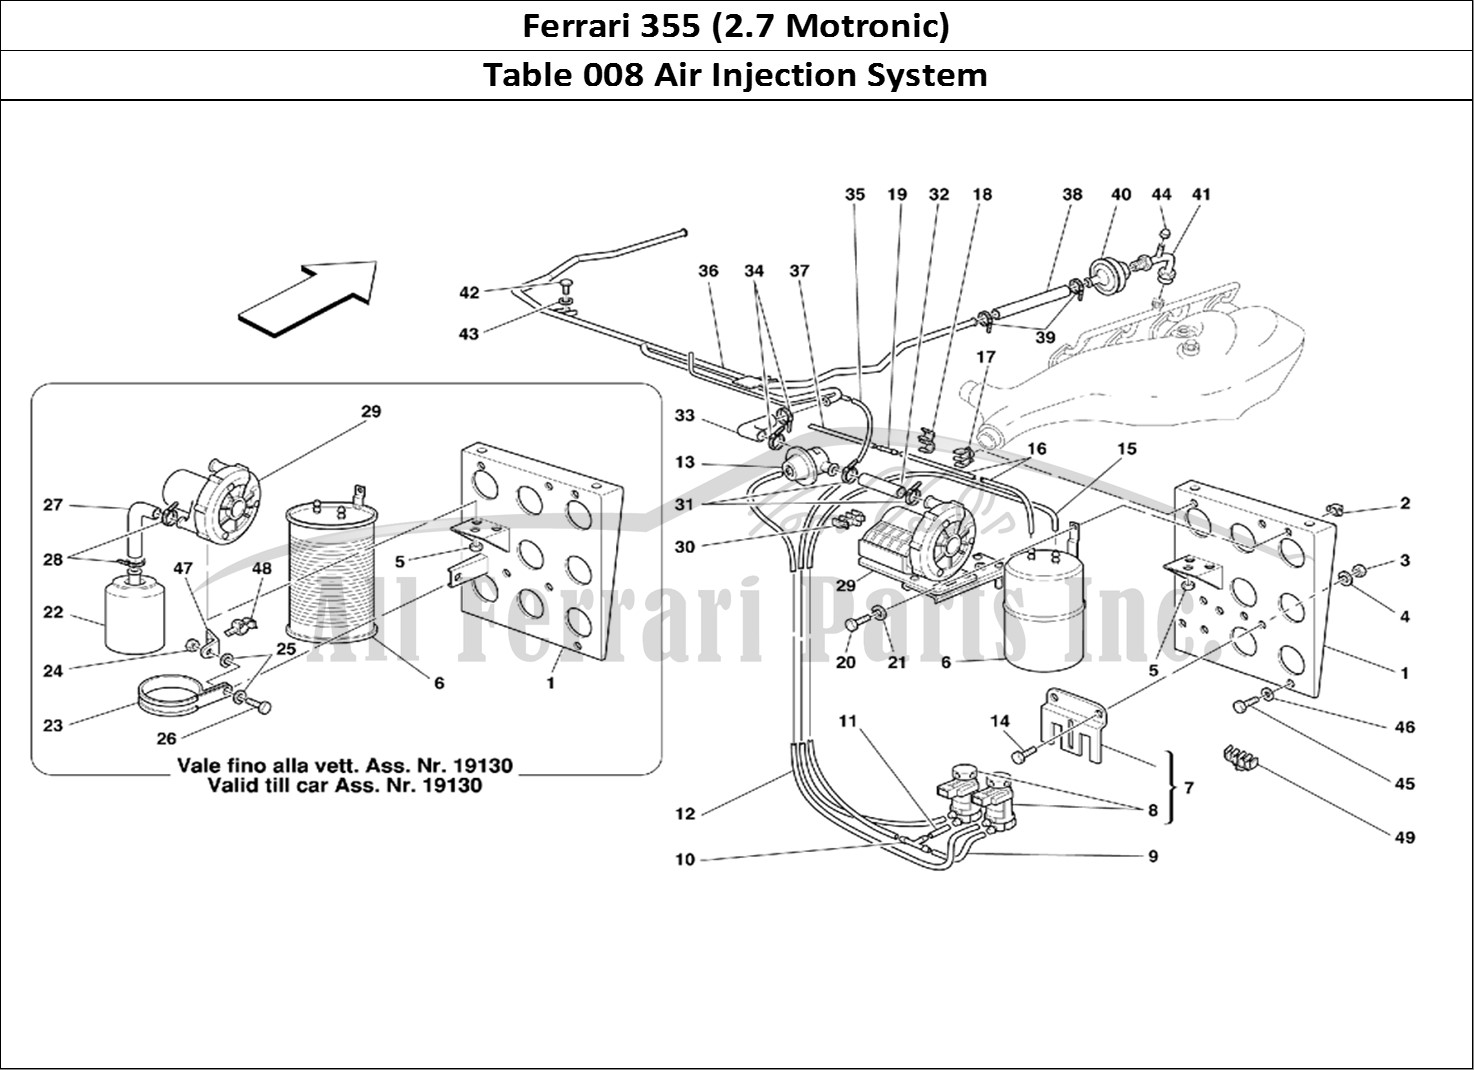 Ferrari Parts Ferrari 355 (2.7 Motronic) Page 008 Air Injection Device